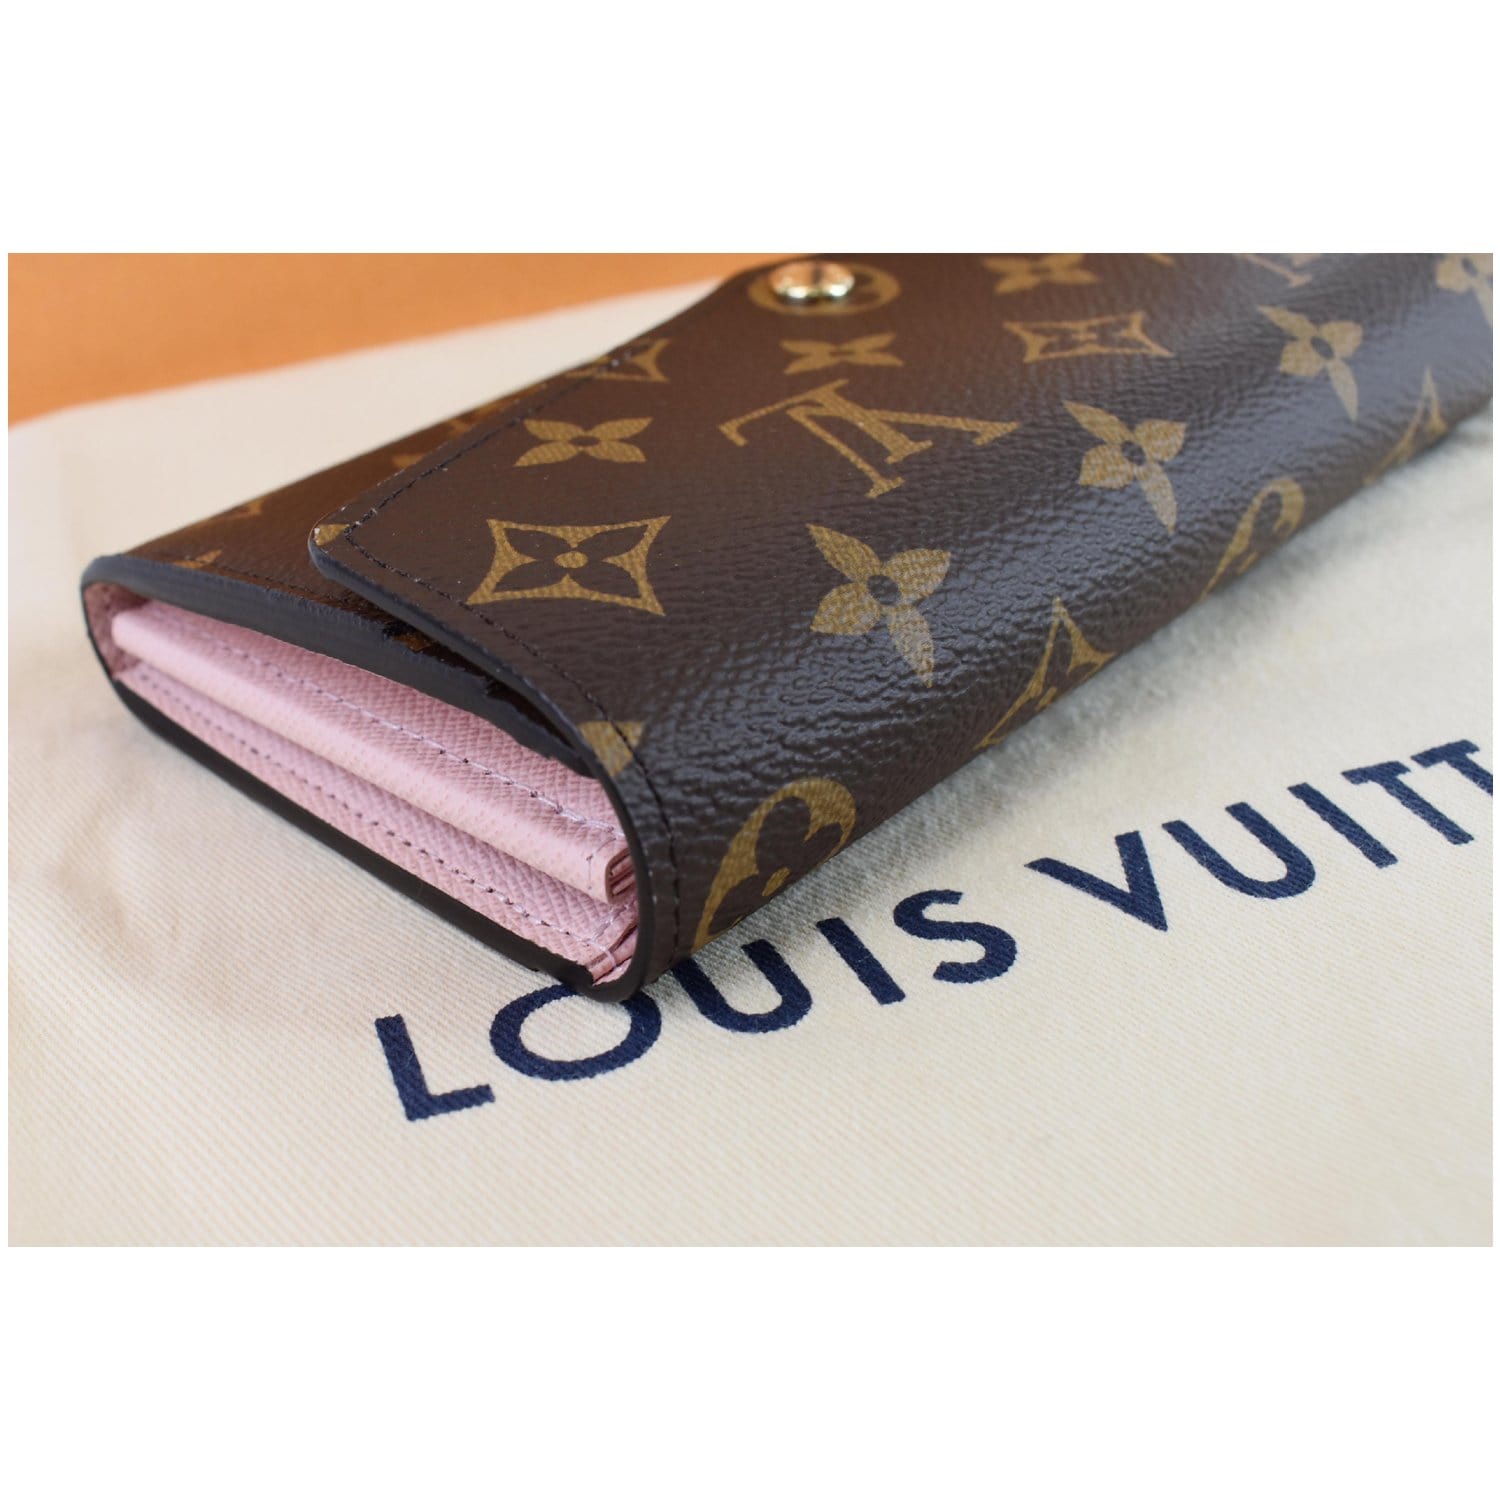 Louis Vuitton - Sarah Wallet - Monogram Canvas - Rose Ballerine - Women - Luxury